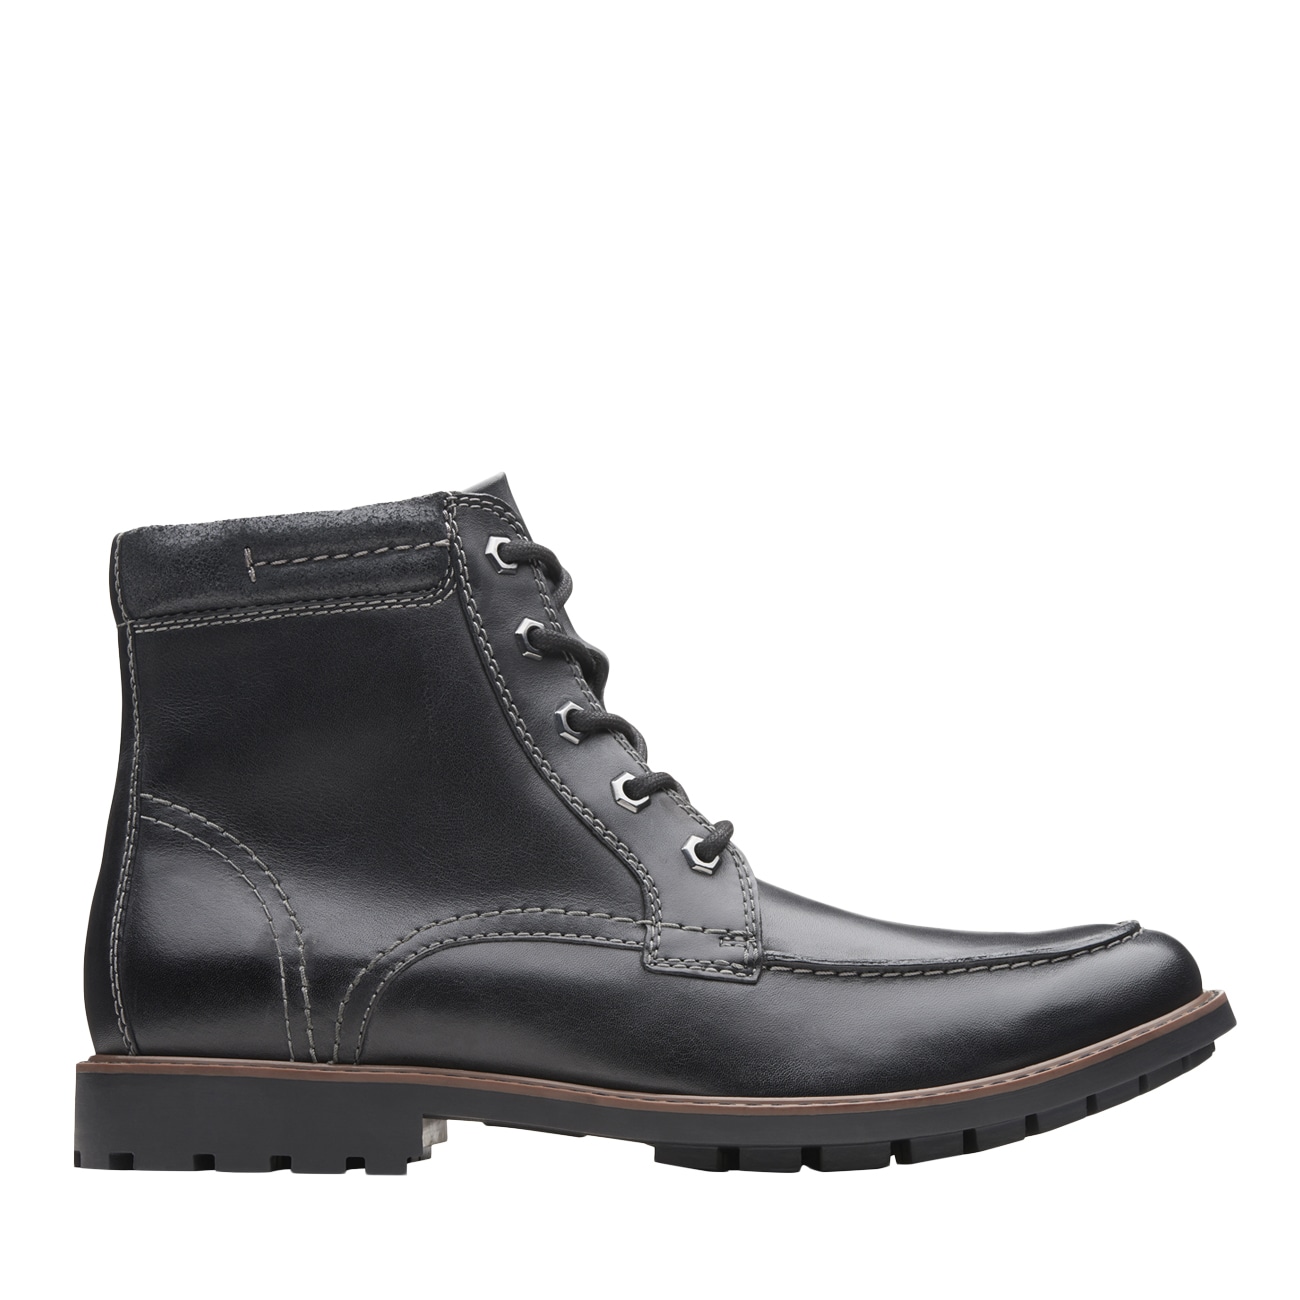 clarks men's curington high leather boots